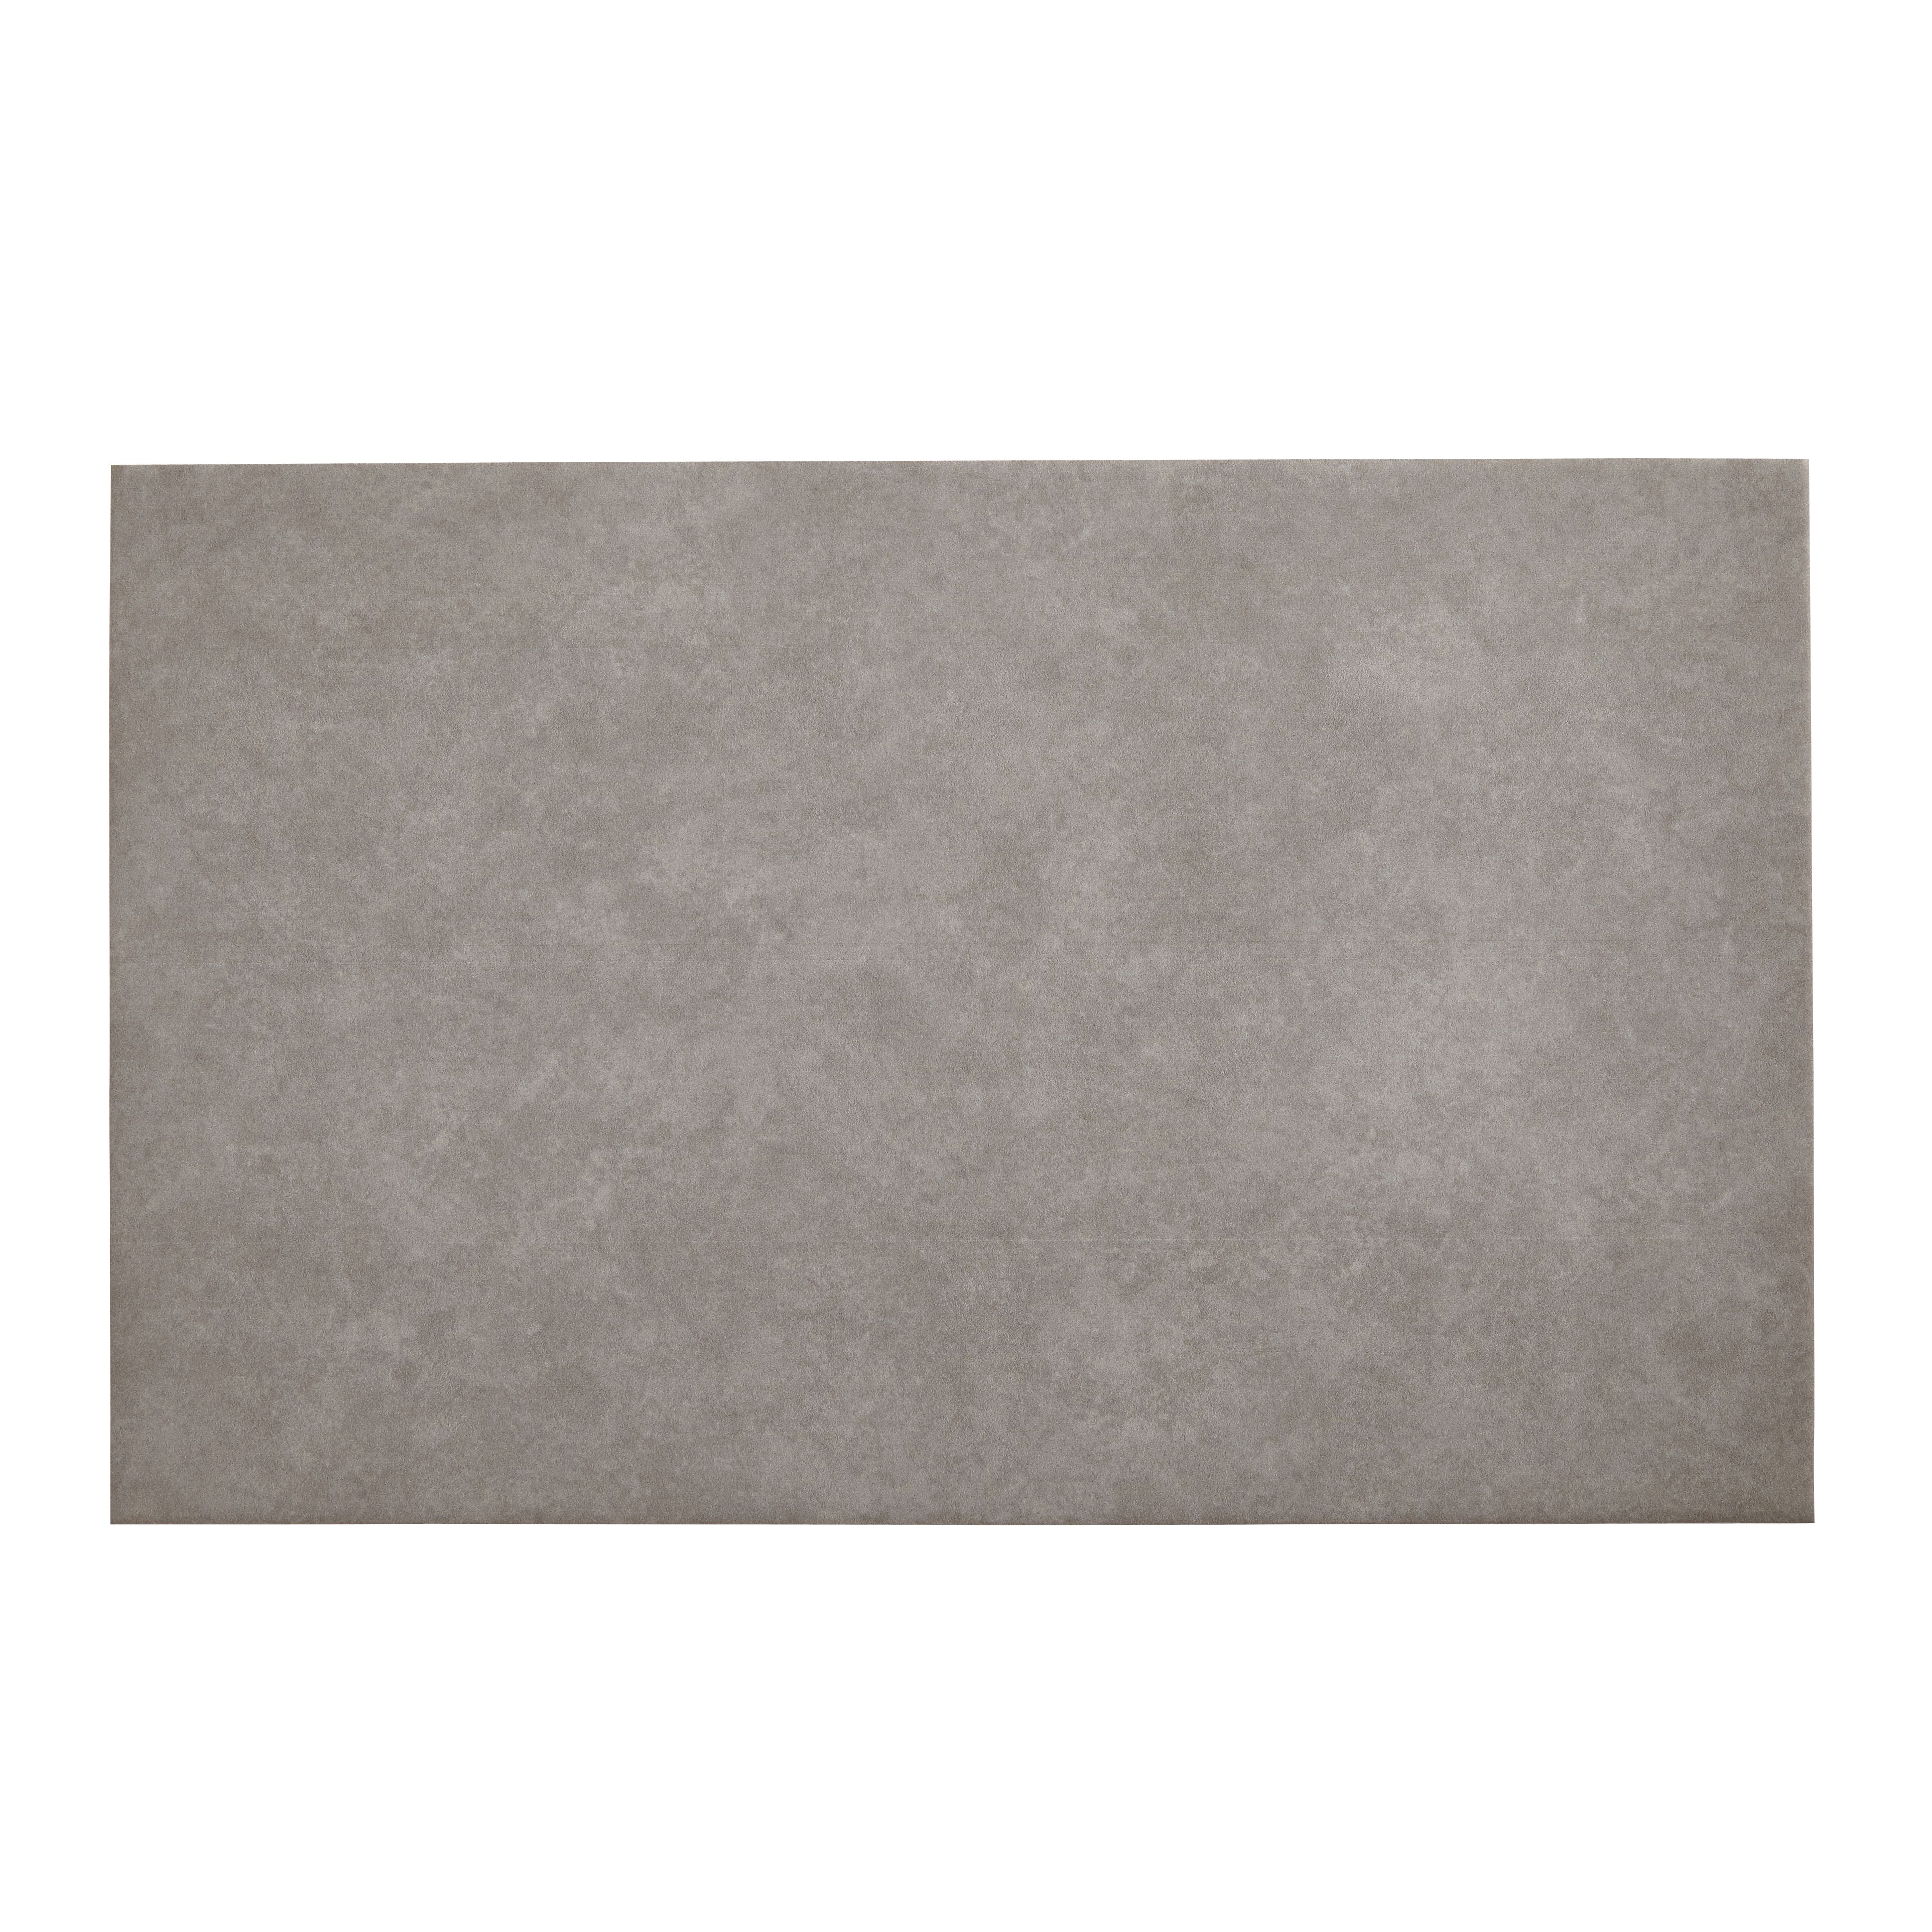 Cimenti Grey Plain Ceramic Wall tile, 1, Sample